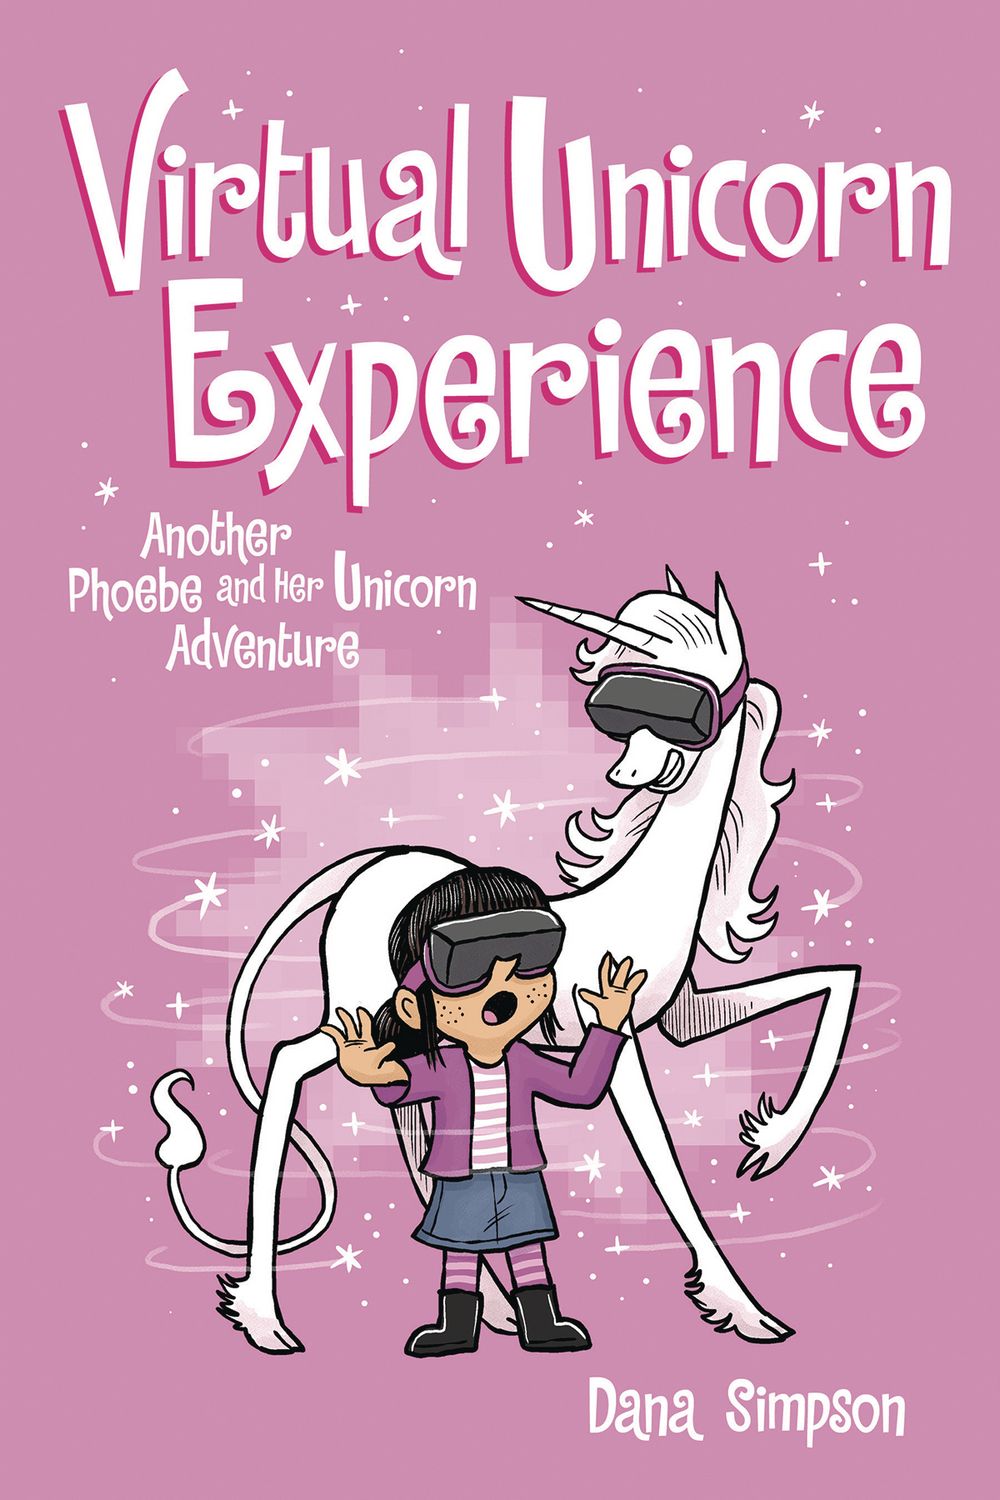 Phoebe & Her Unicorn GN VOL 12 Virtual Unicorn Experience